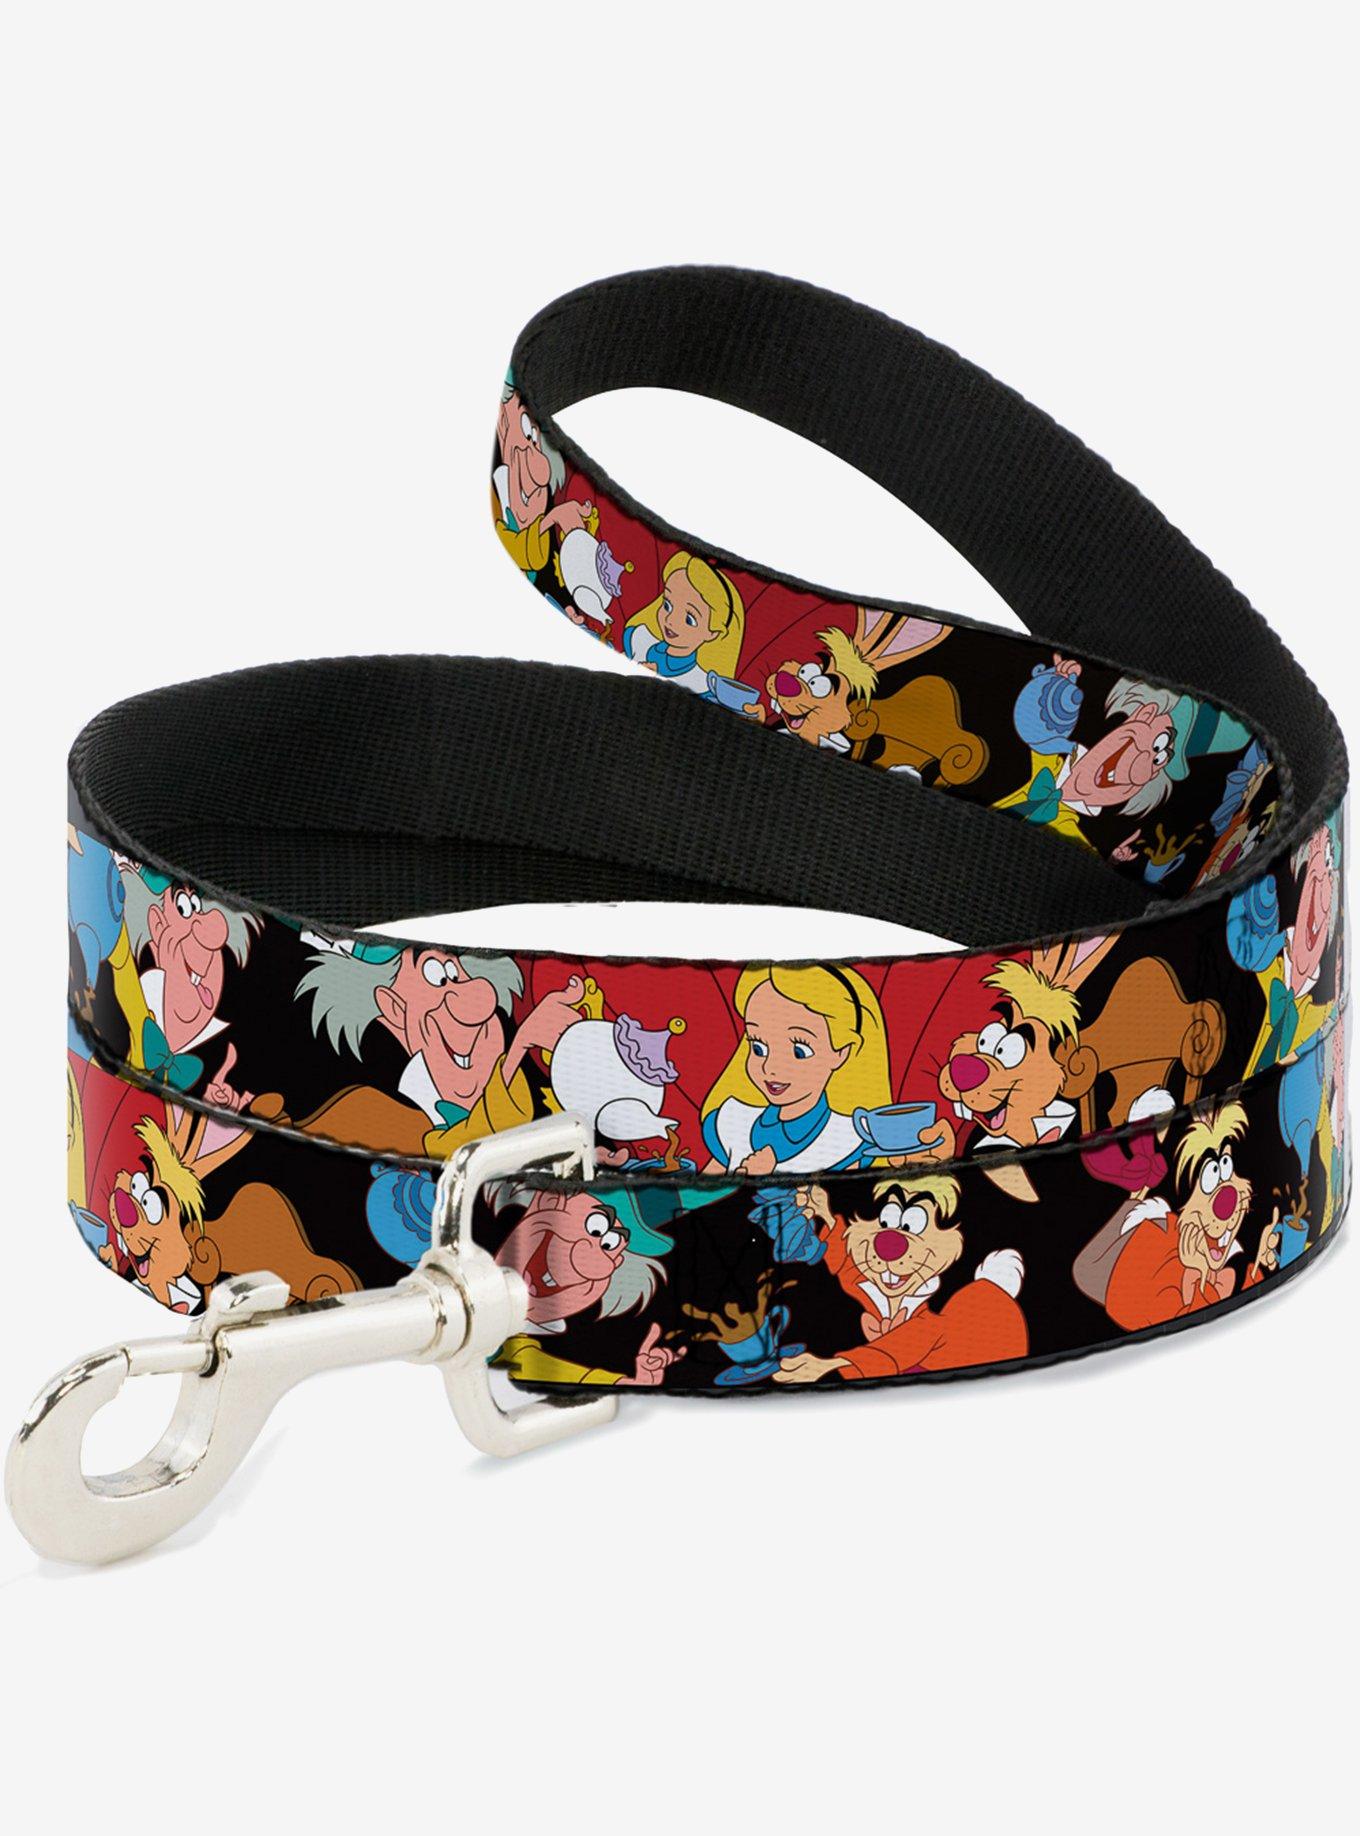 Disney Alice in Wonderland Mad Hatters Tea Party Poses Dog Leash 6 Ft, , hi-res